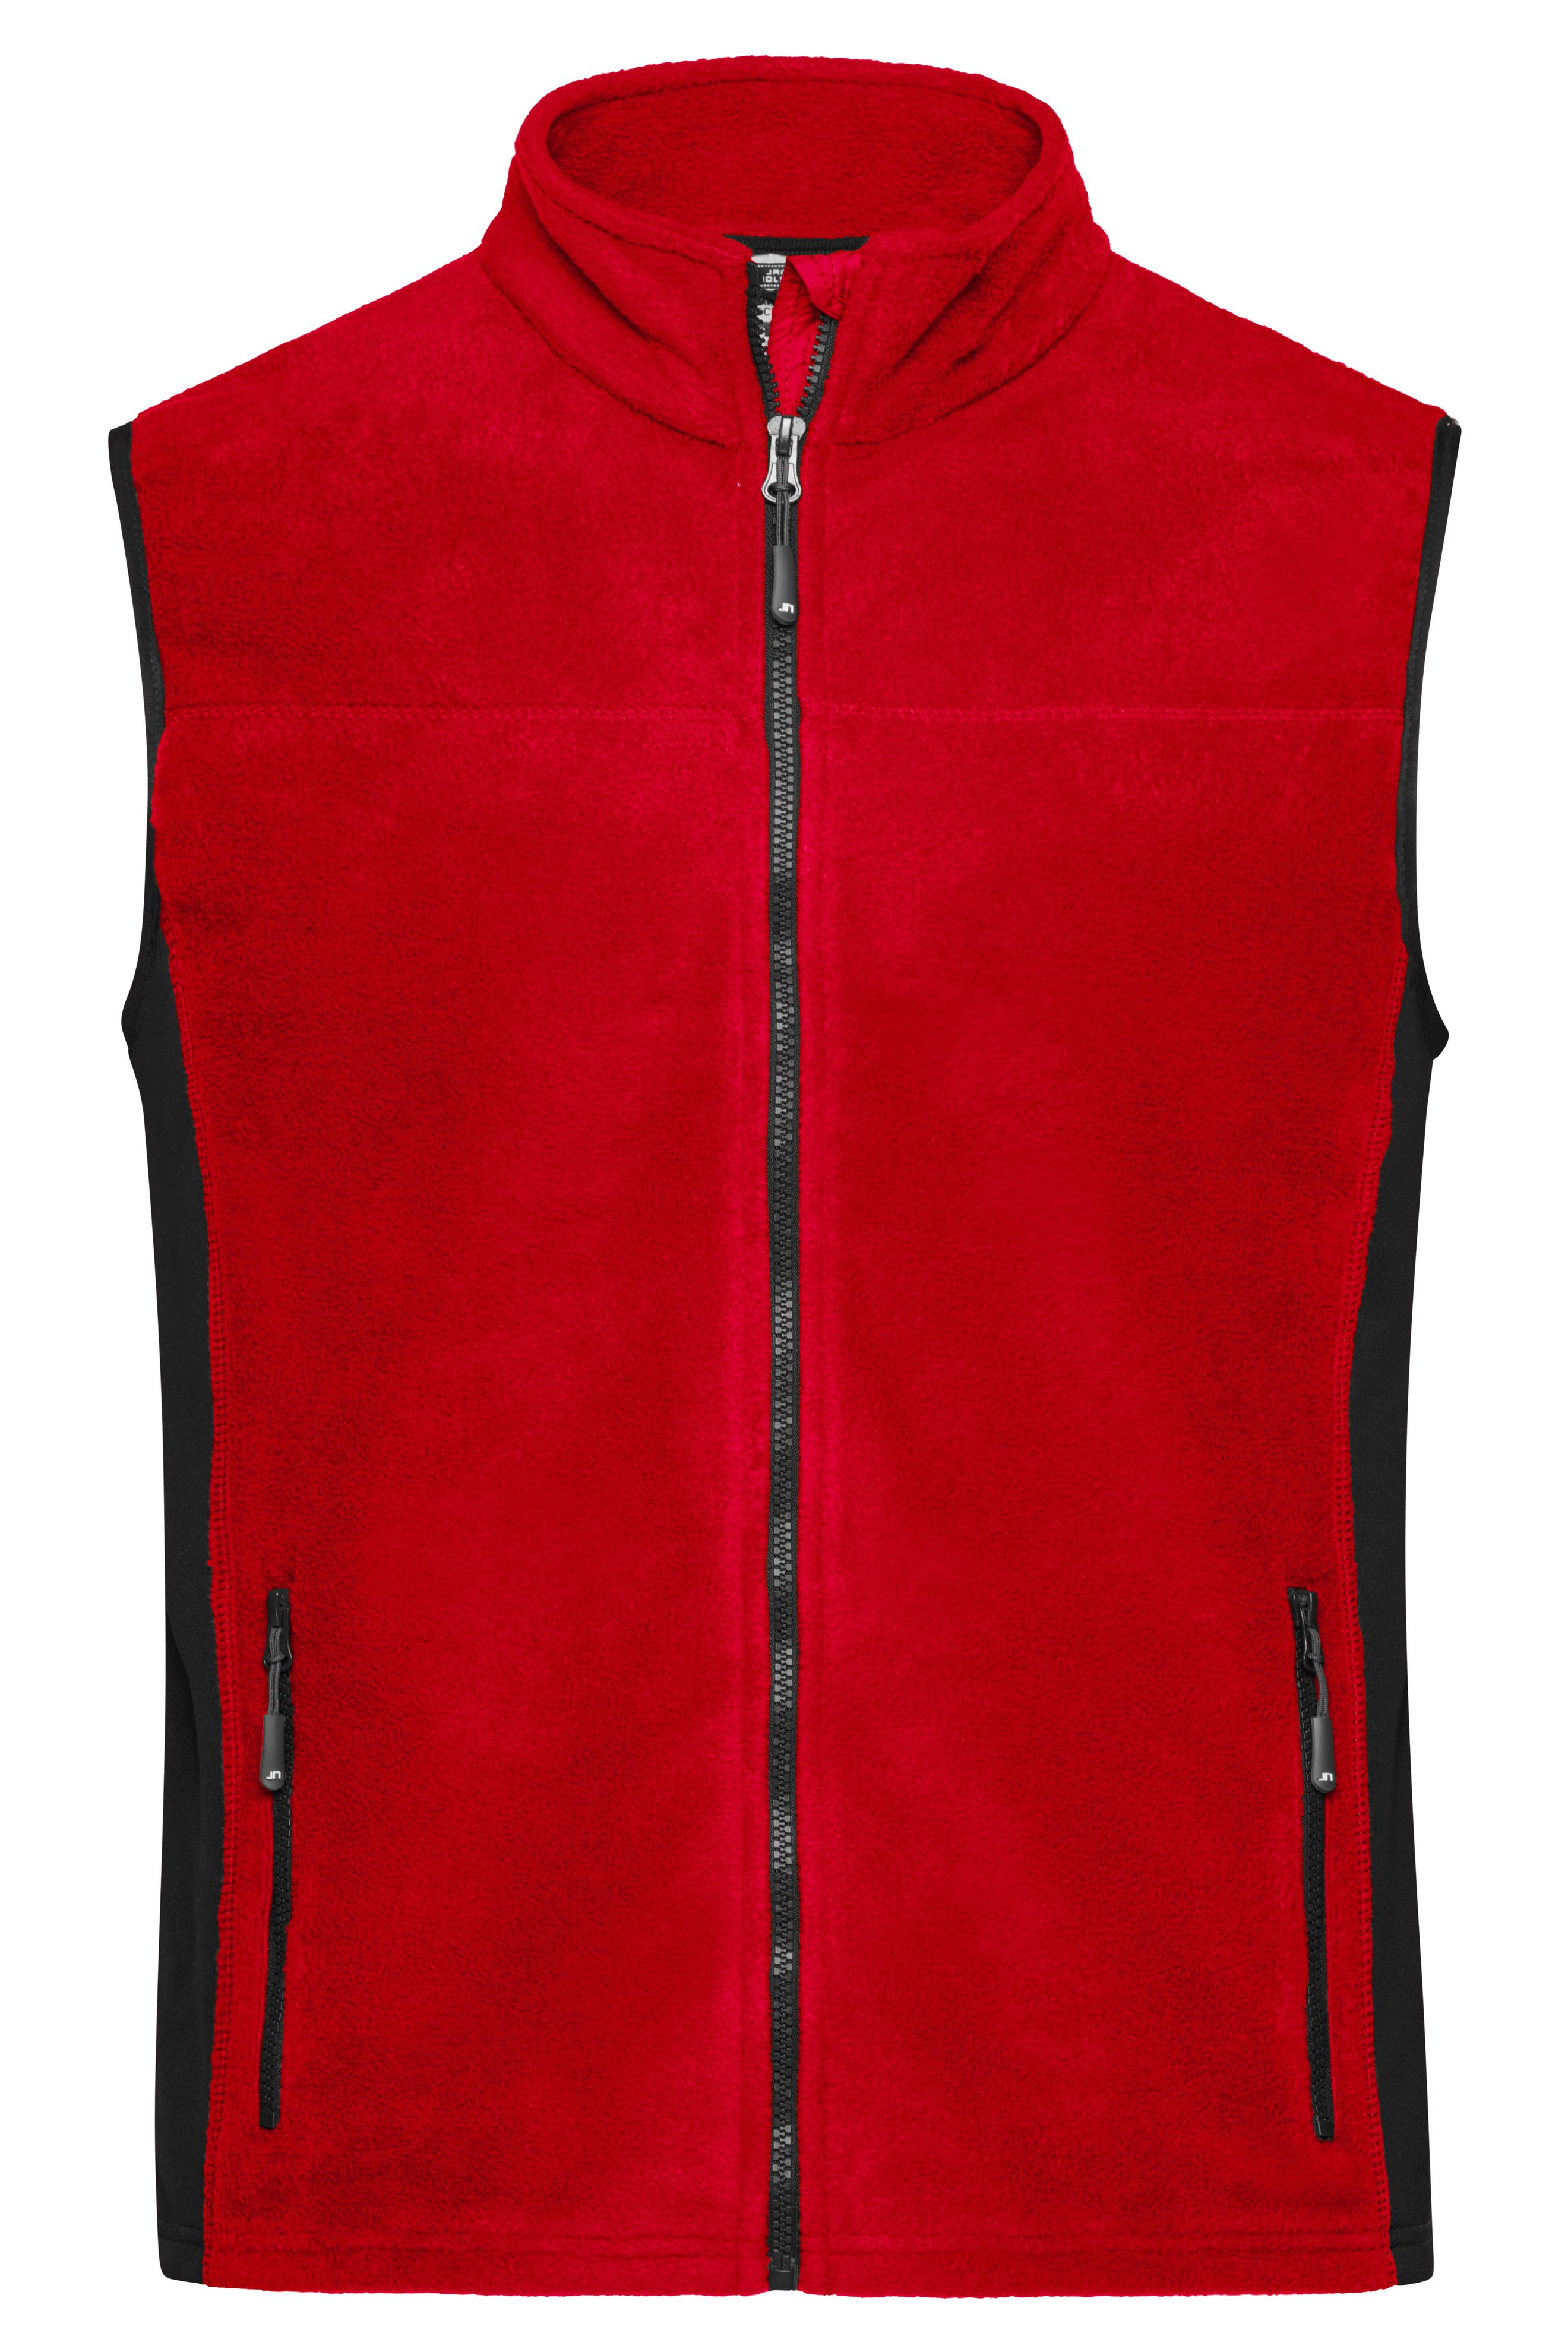 Herren Workwear Fleece Weste James & Nicholson® red/black 6XL